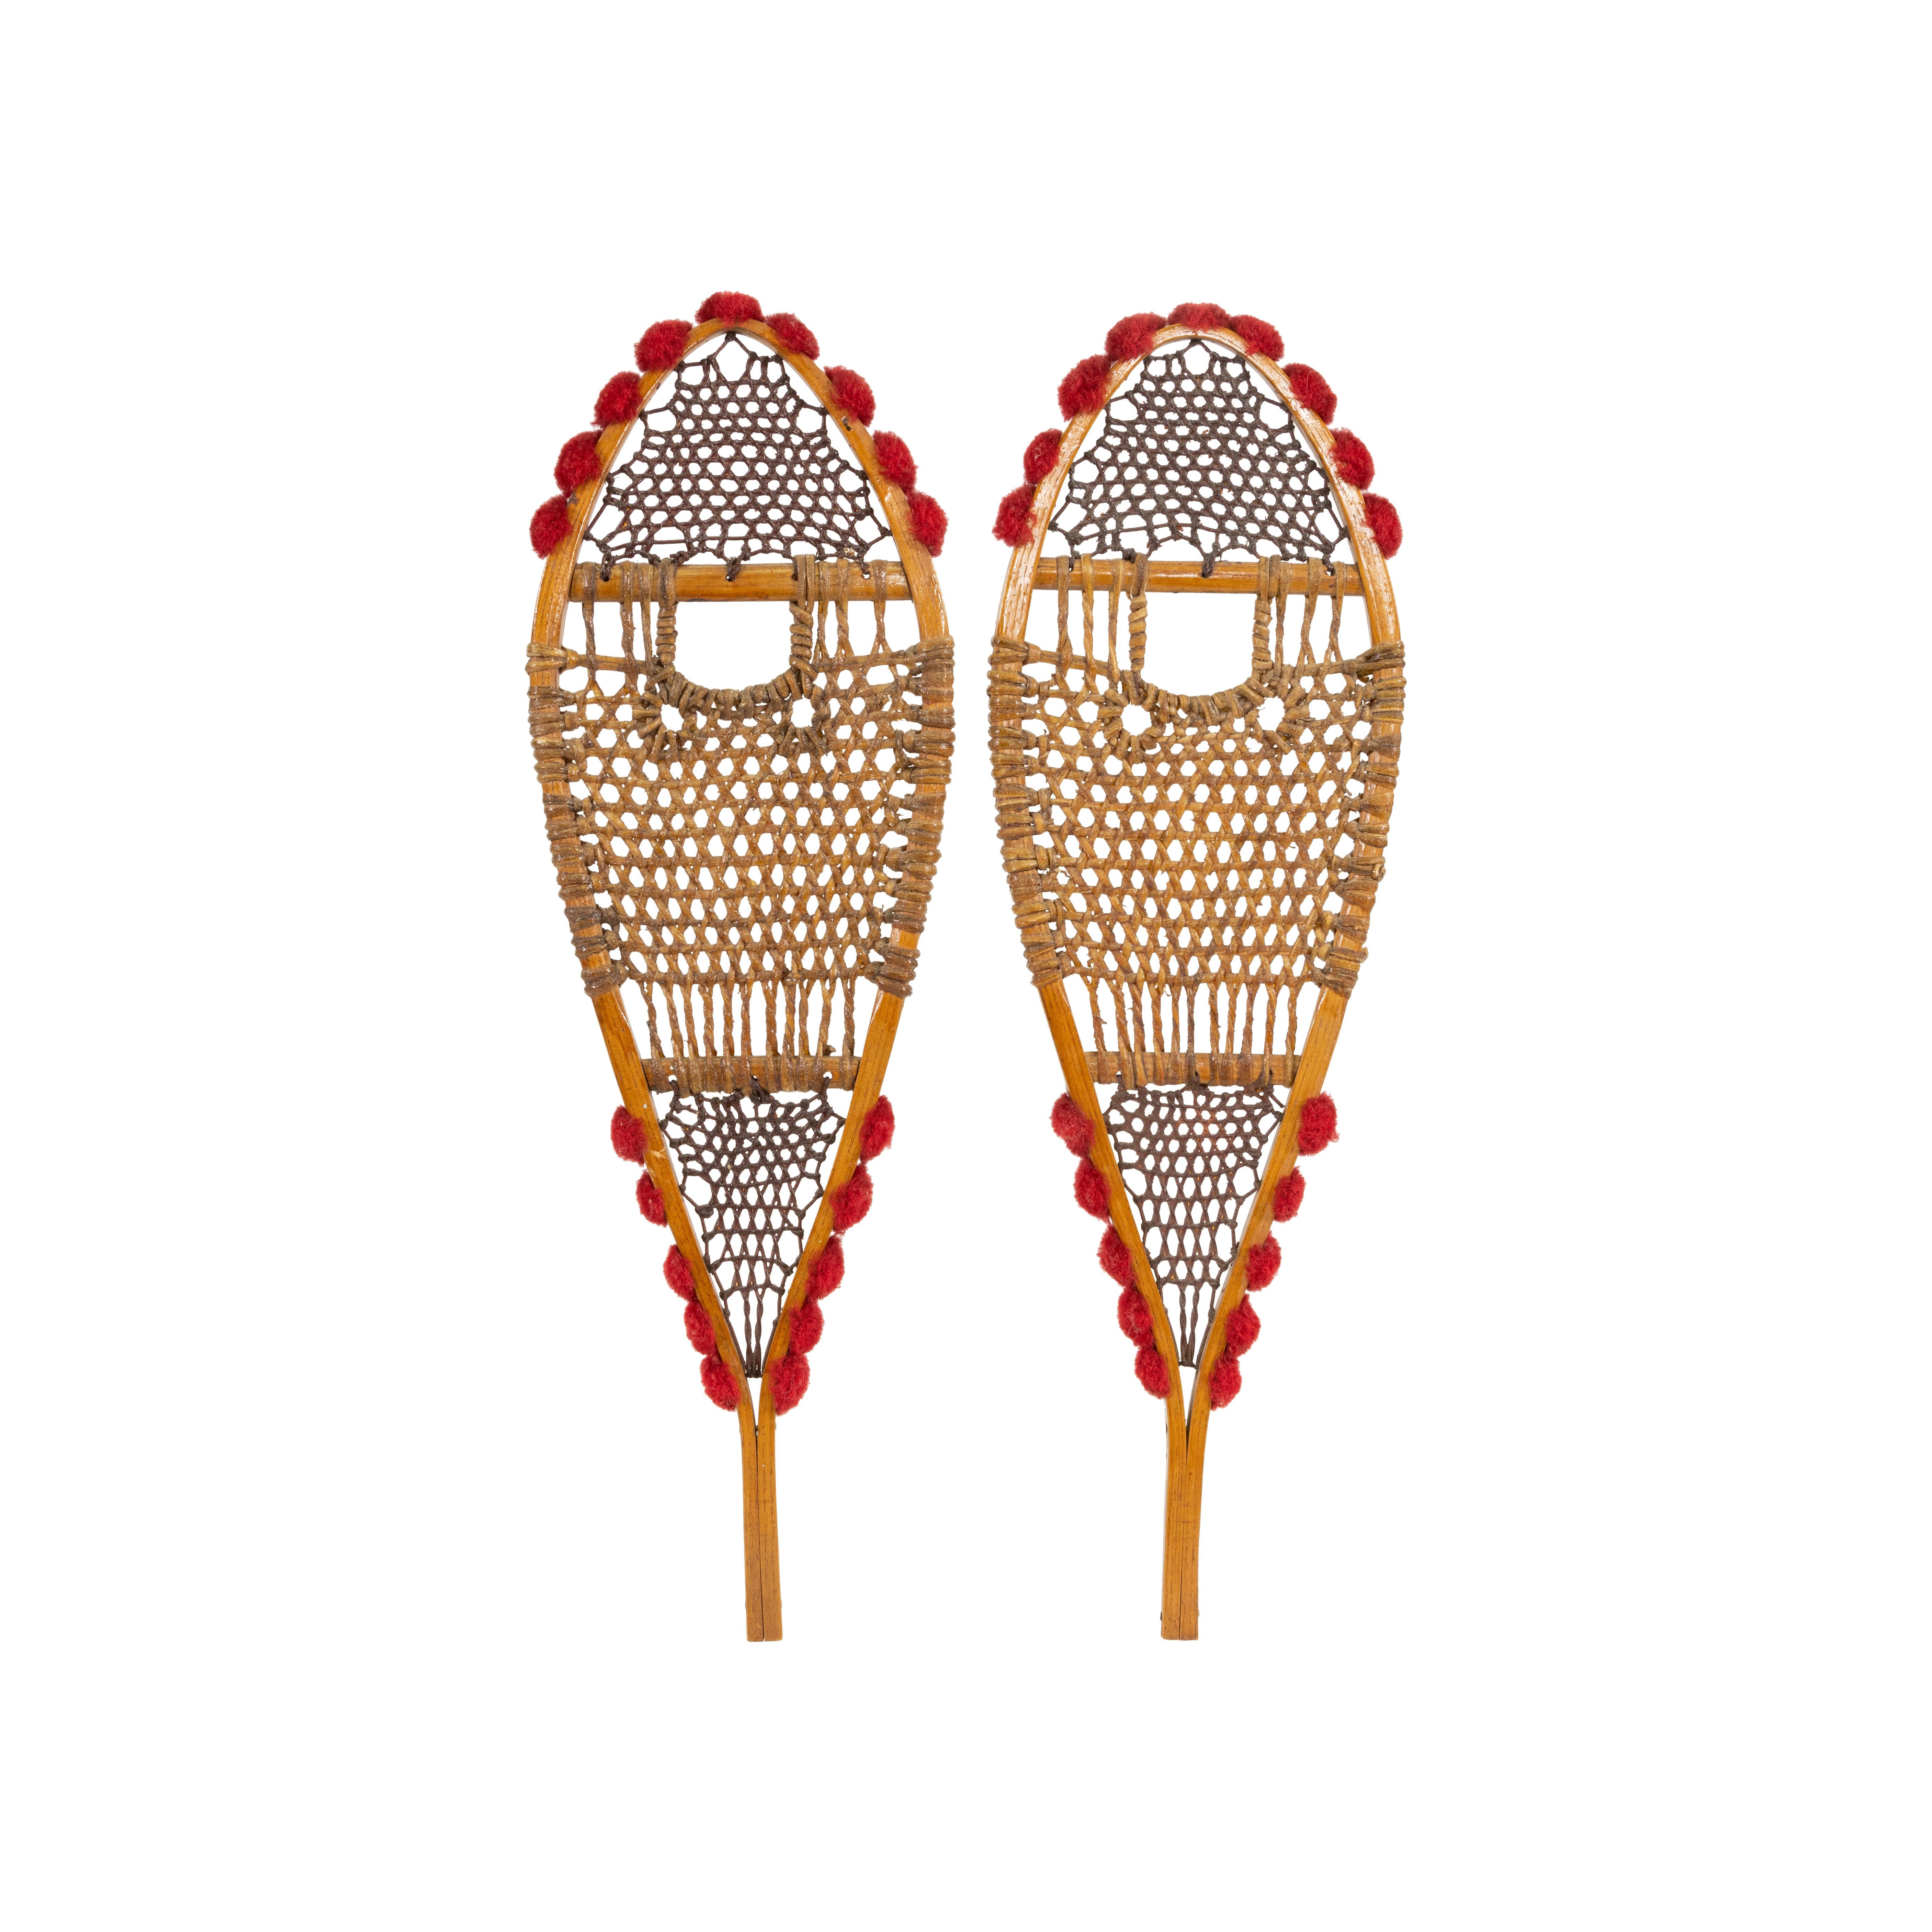 ojibwe snowshoes